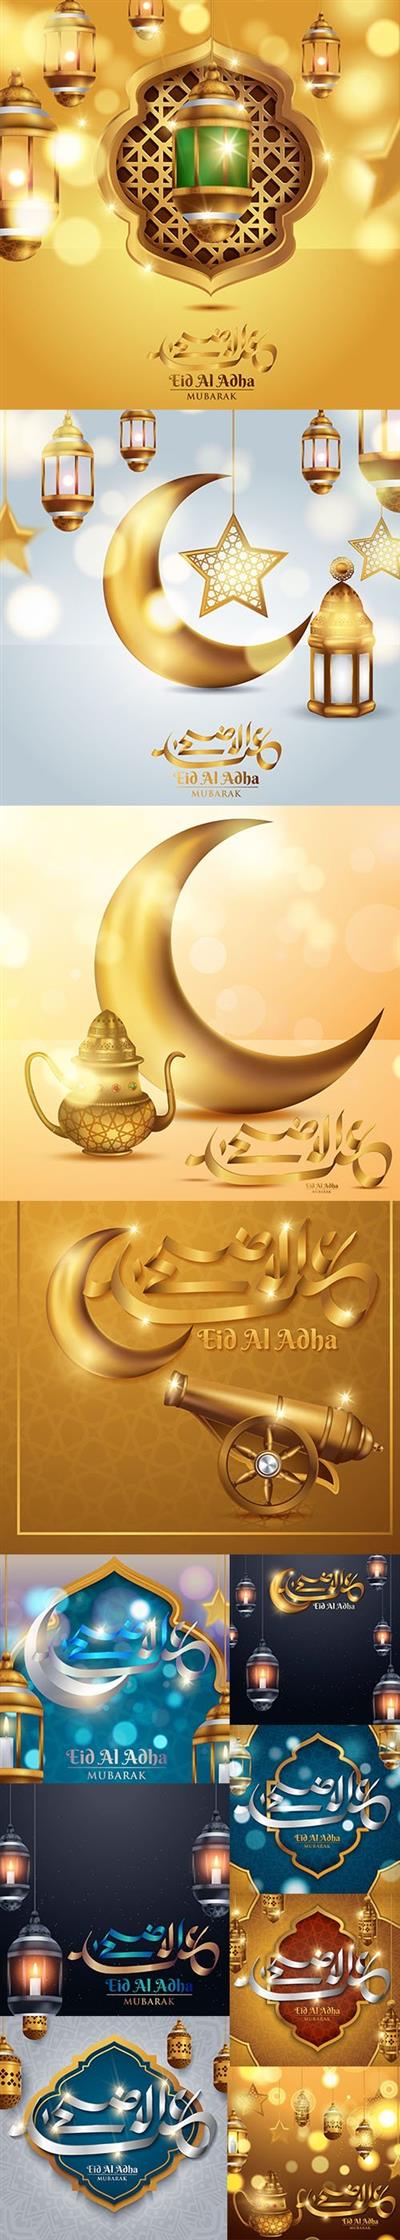 Eid Adha Mubarak Backgrounds Set